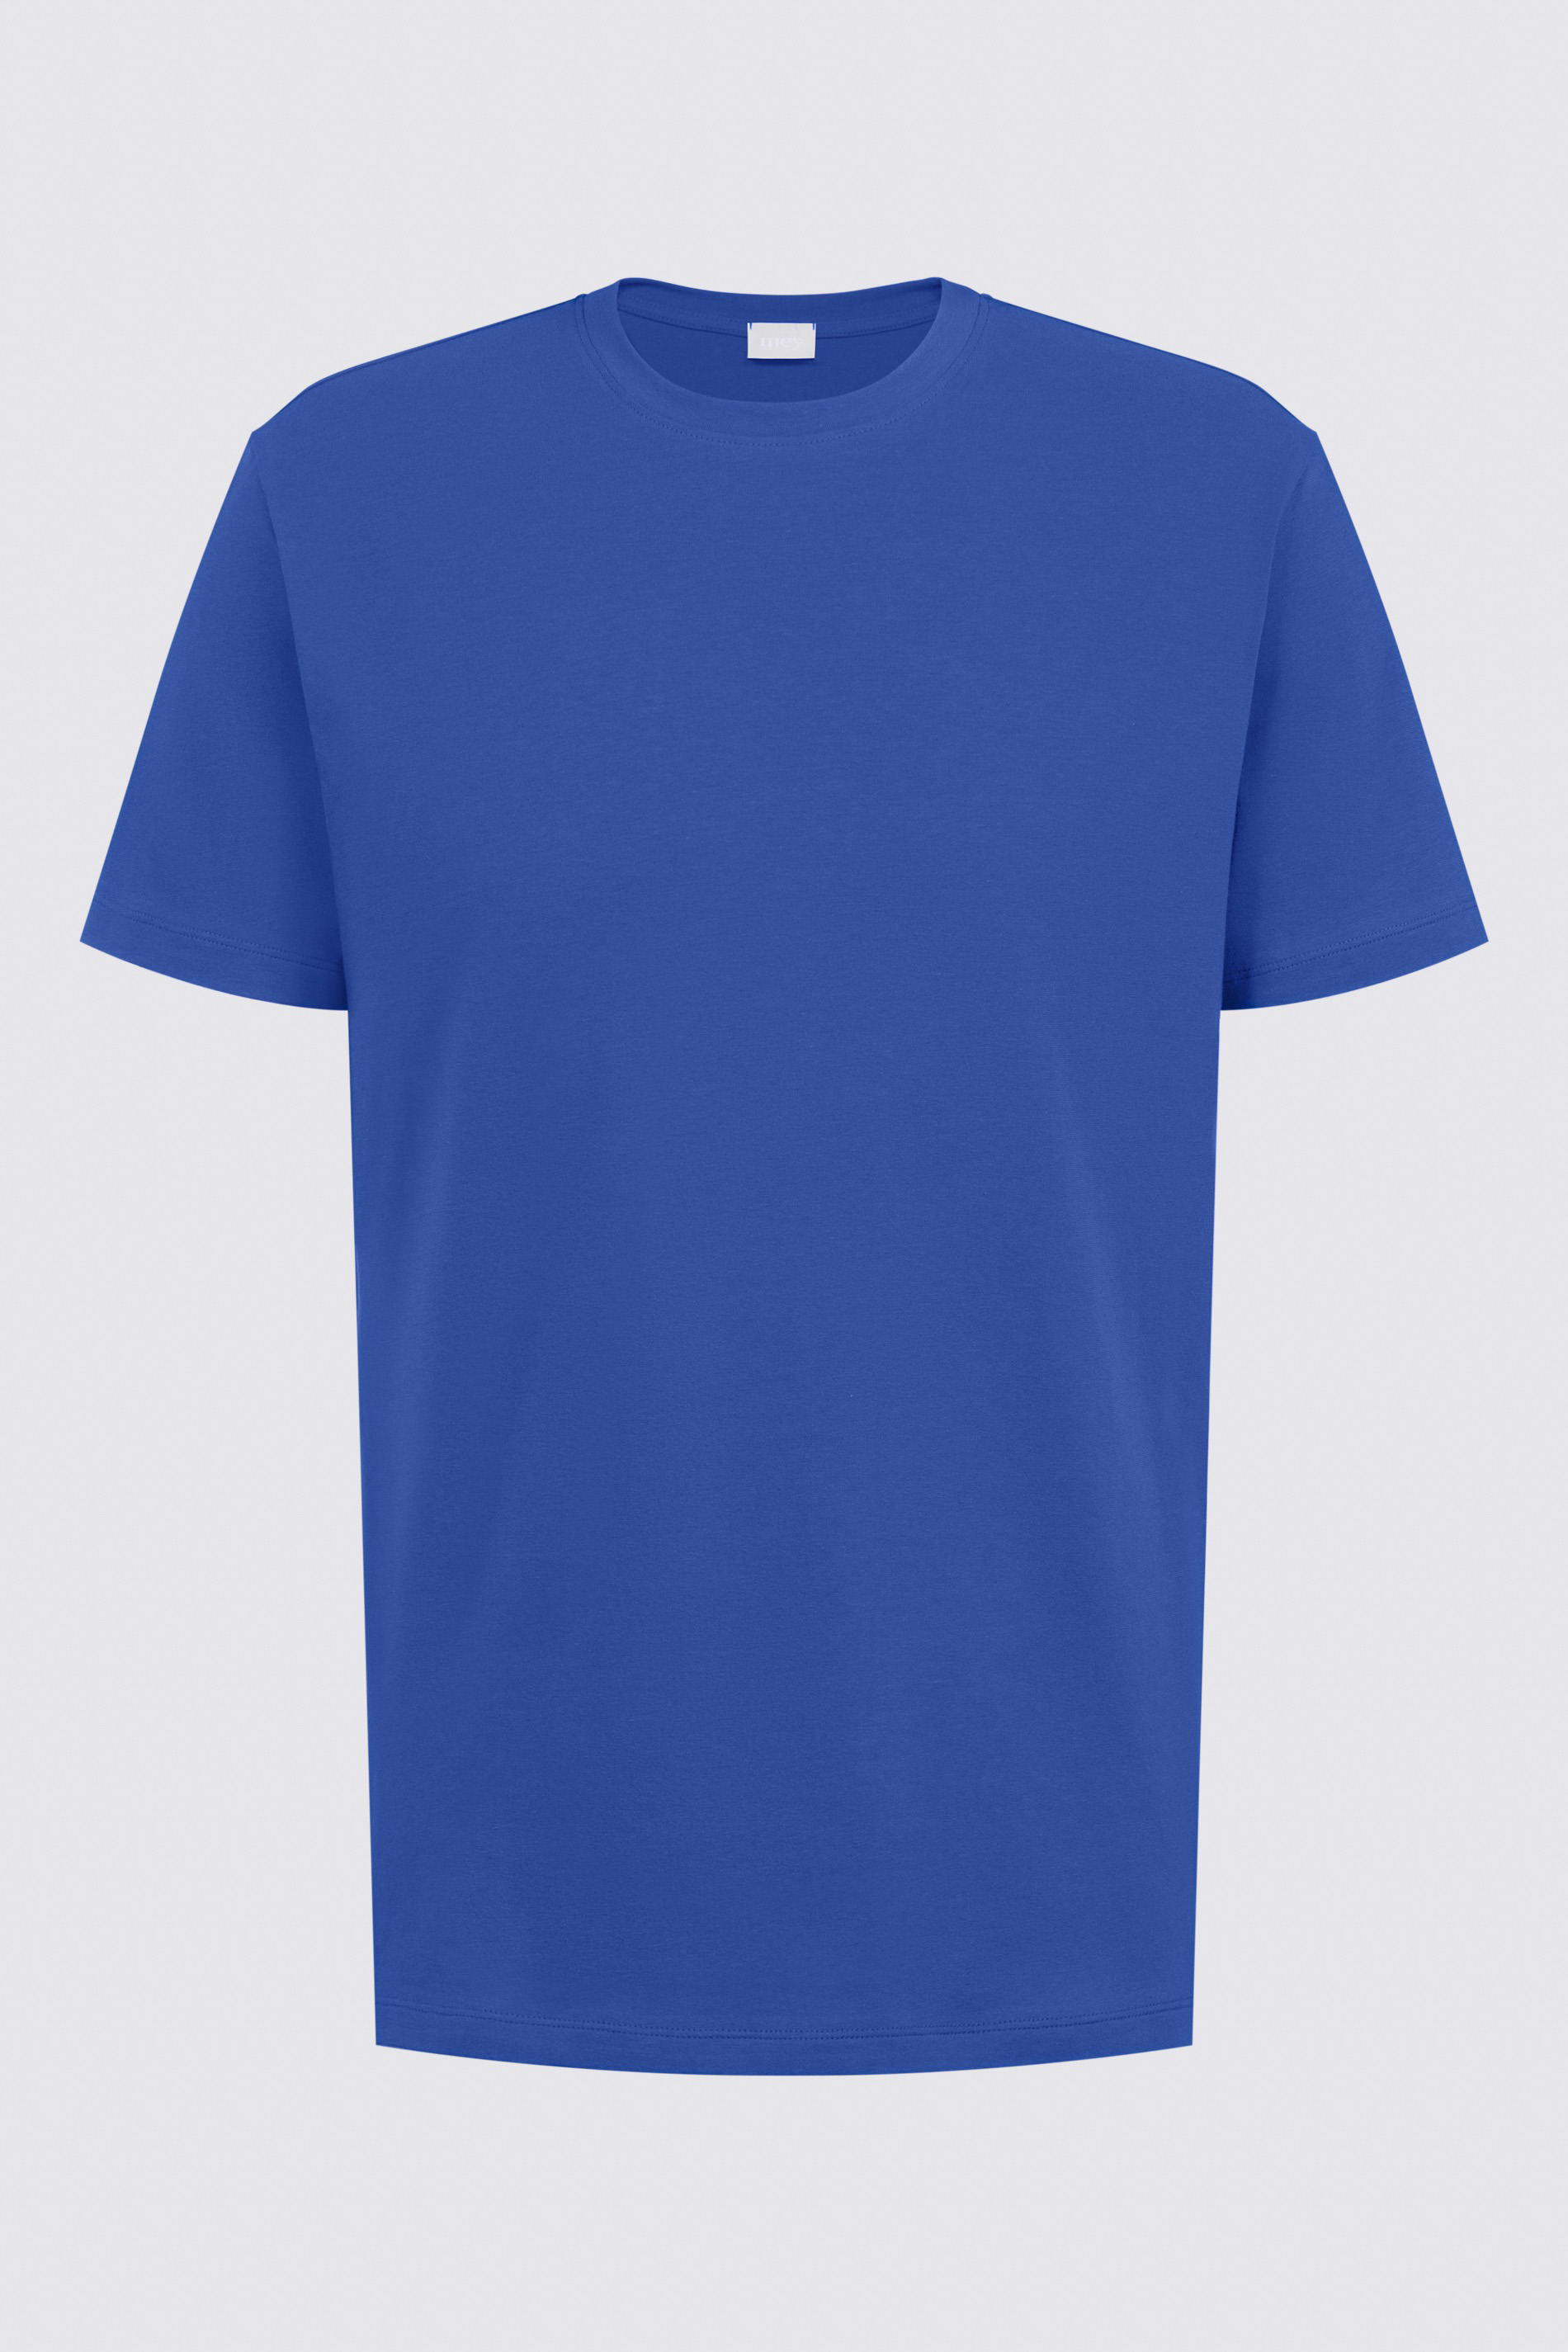 T-Shirt Serie Relax Freisteller | mey®